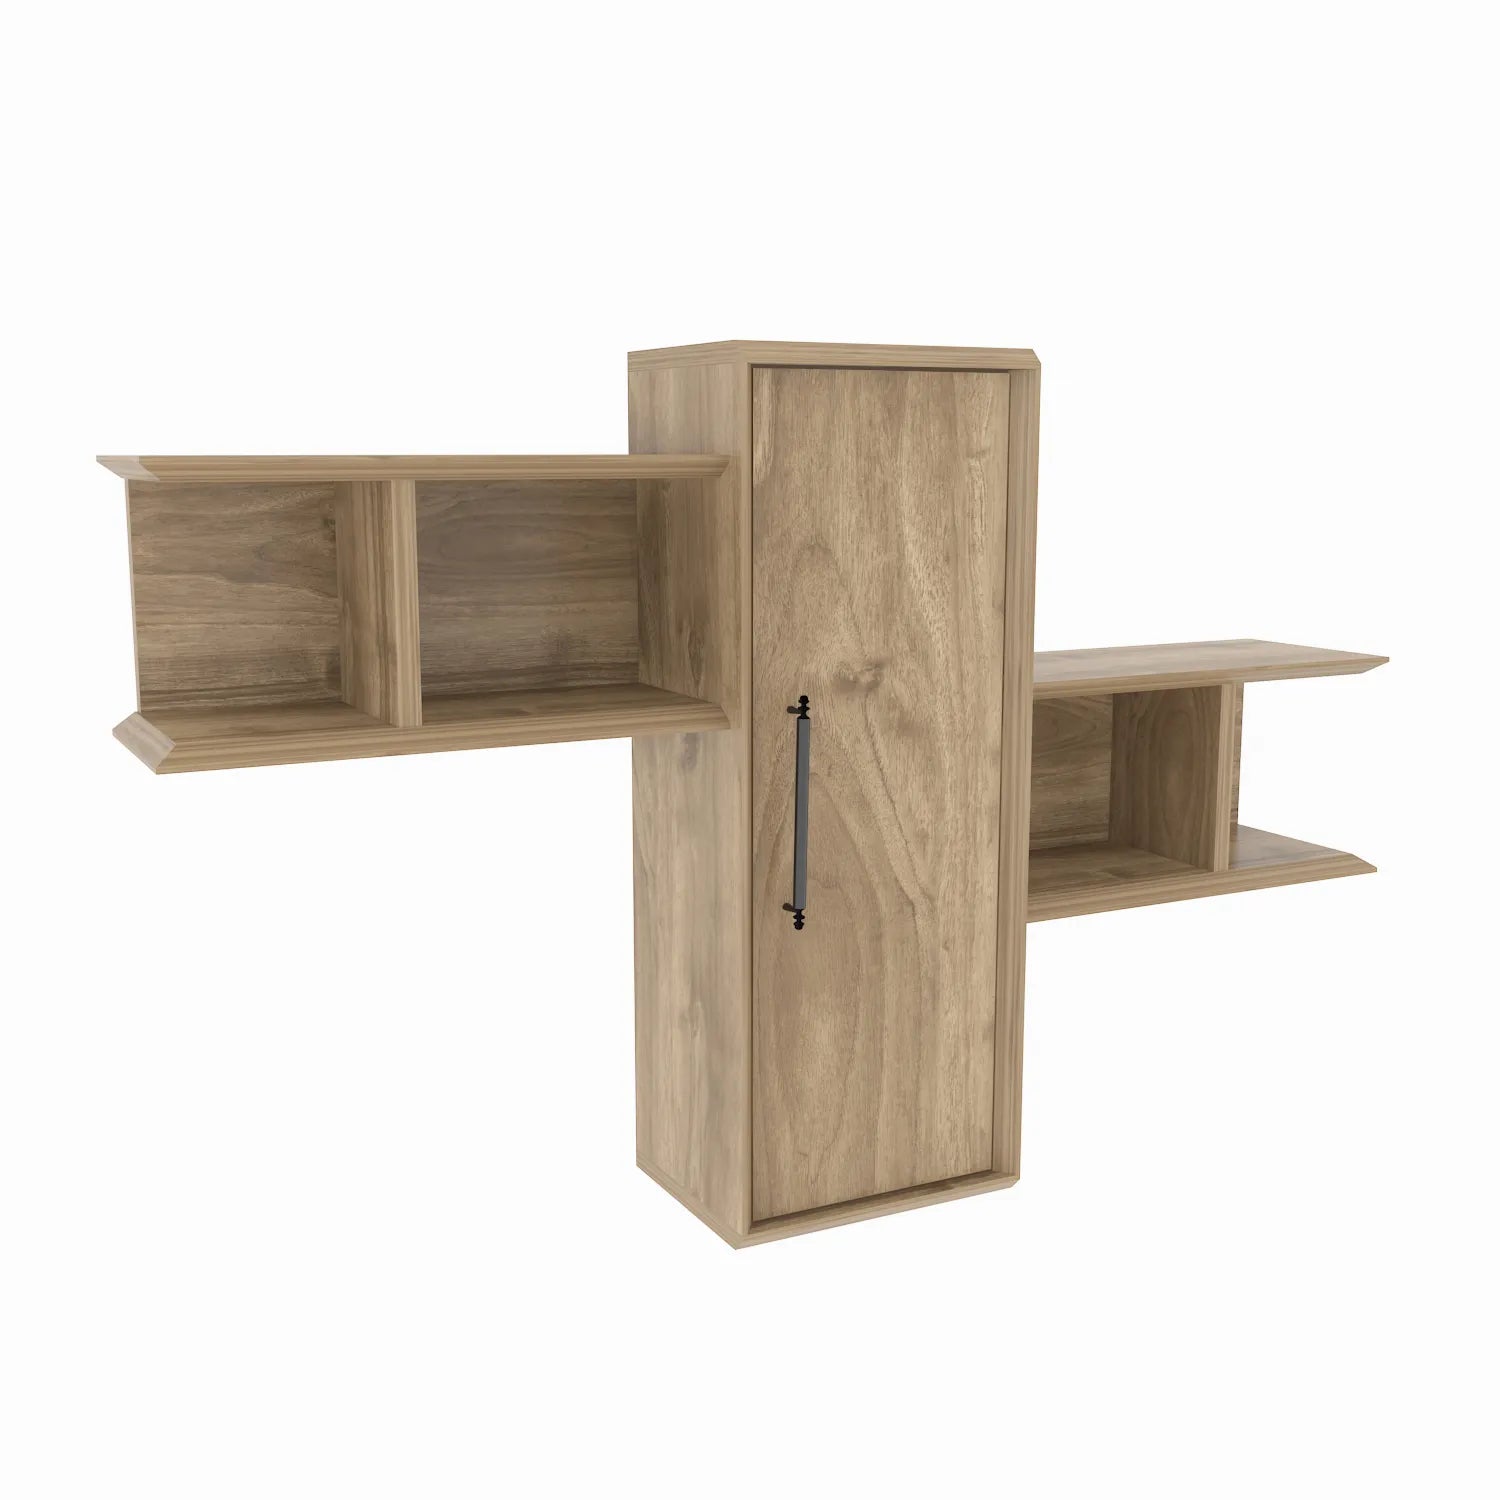 Olida Wall Shelf - Modern Design | 2 Shelves and Cabinet for Storage